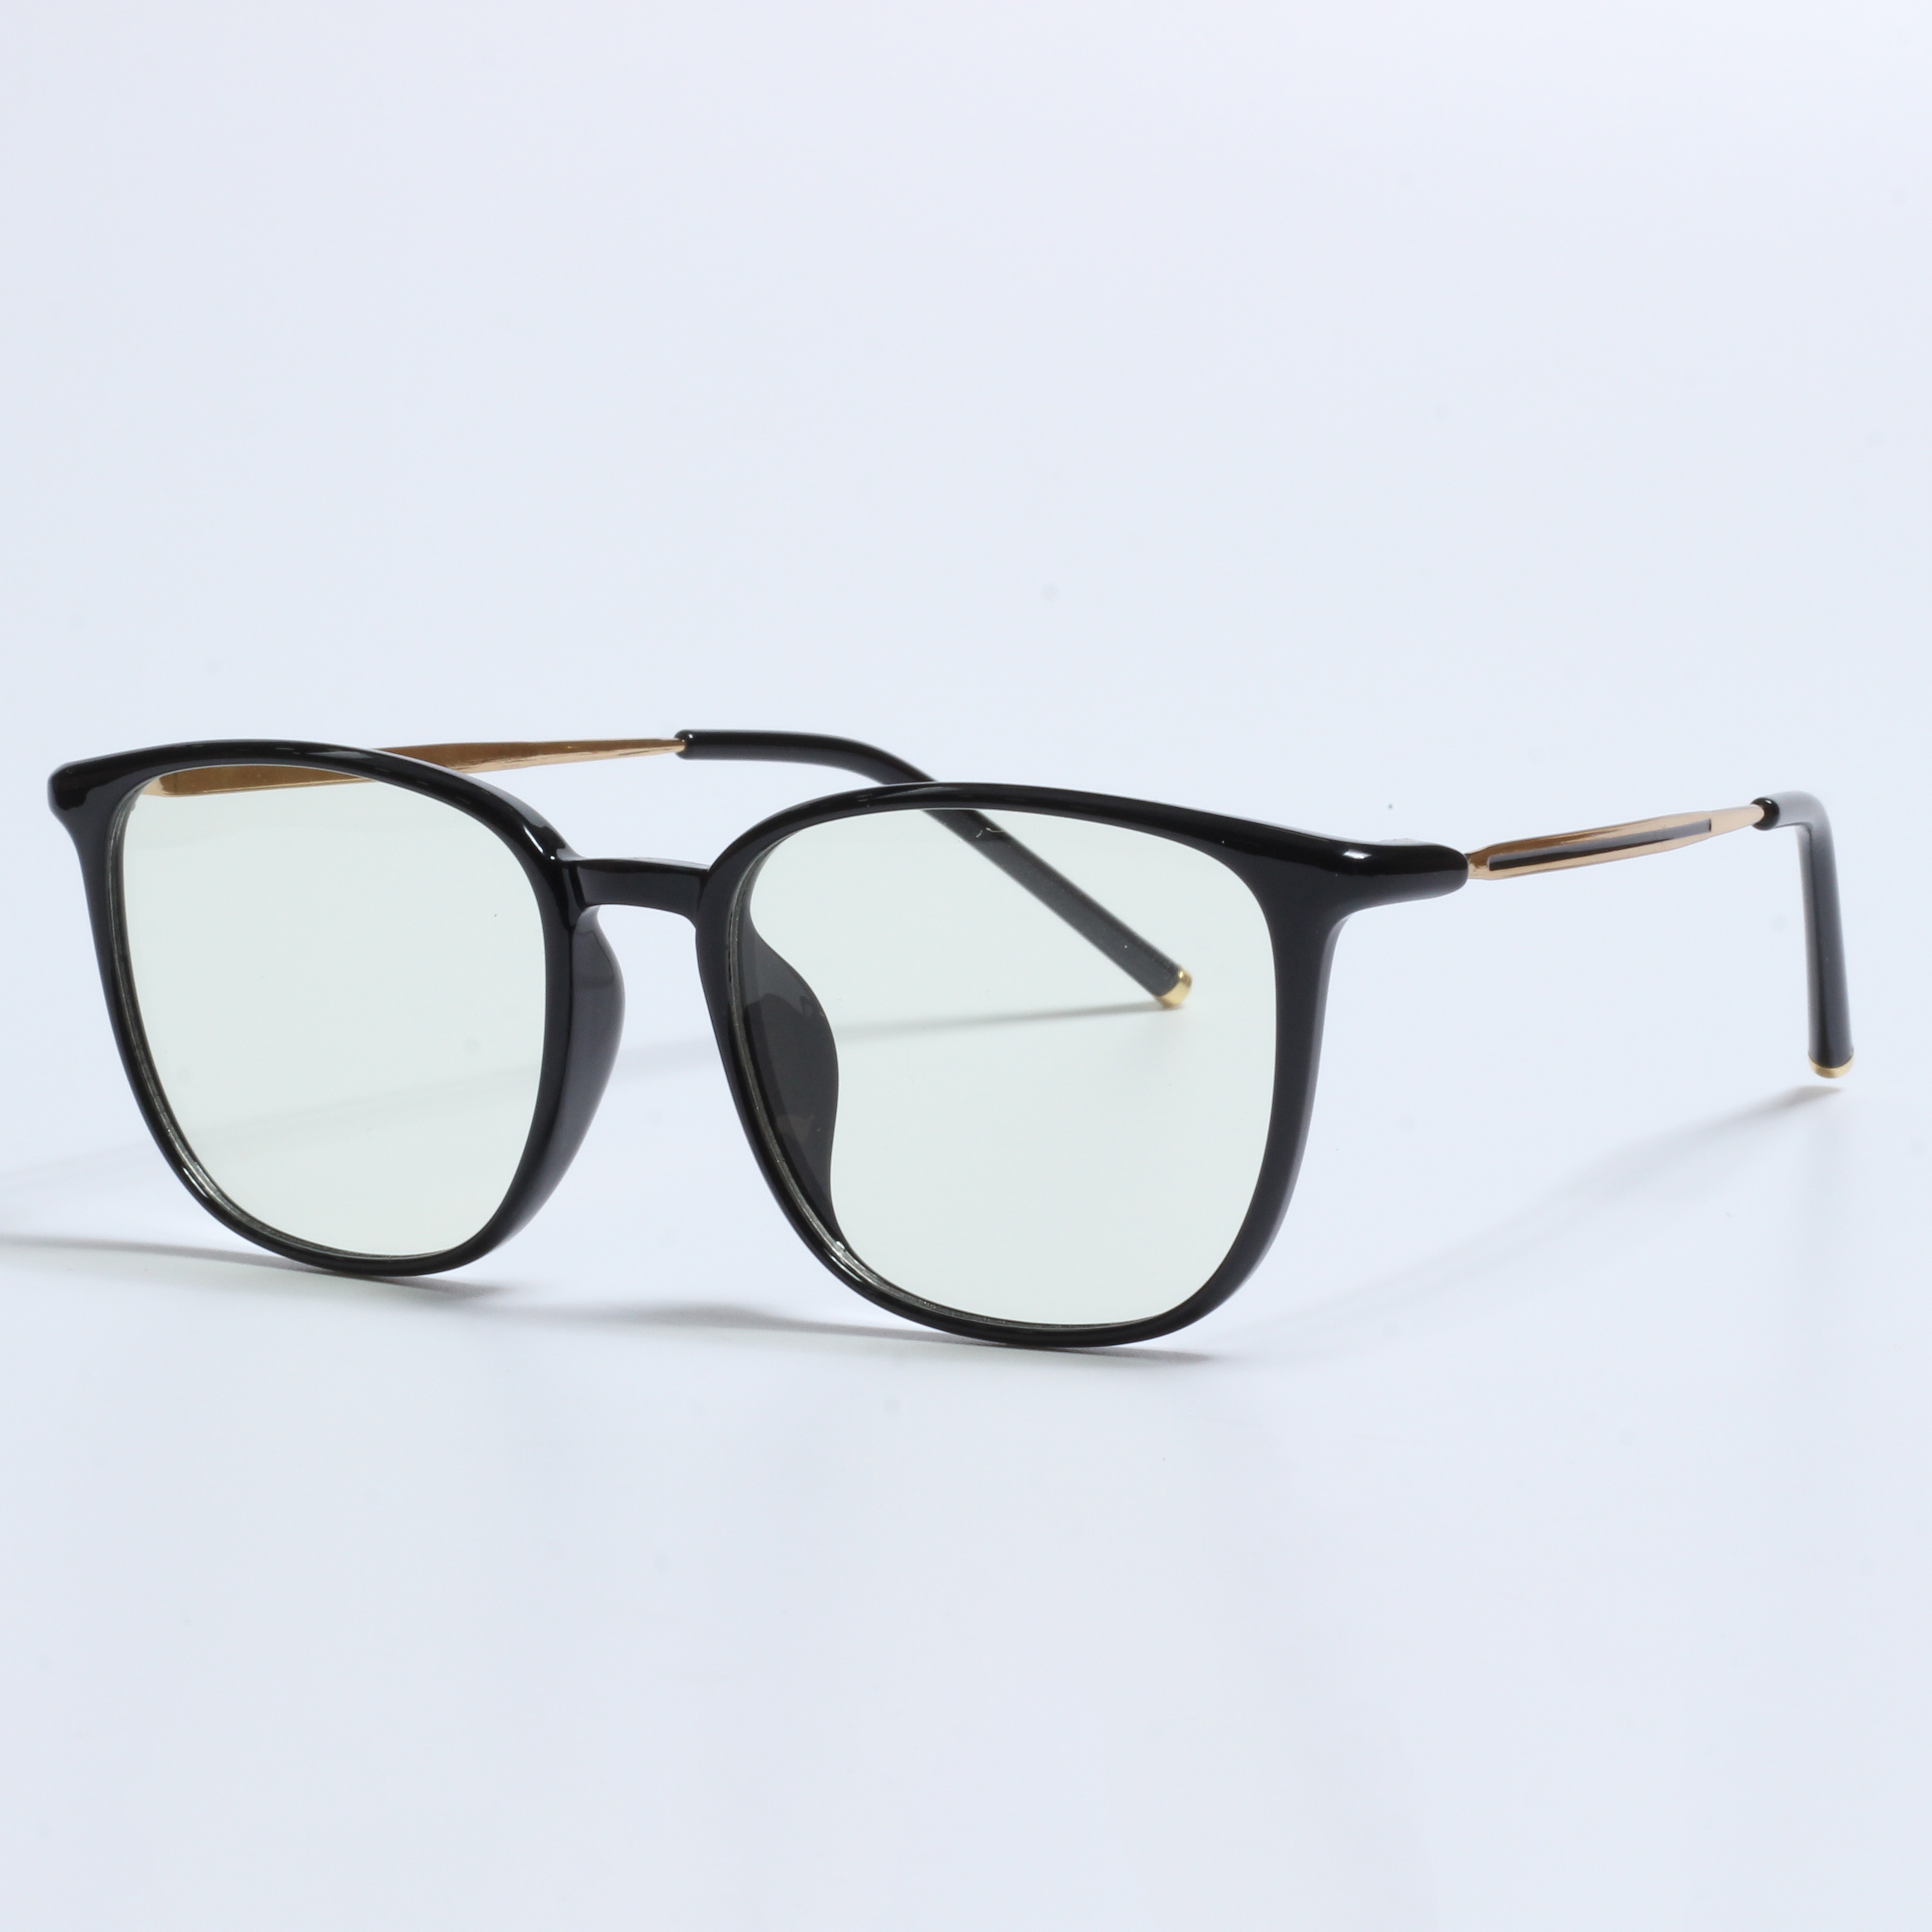 Nova retro lunette anti lumiere dizajnerska korekcijska očala (2)